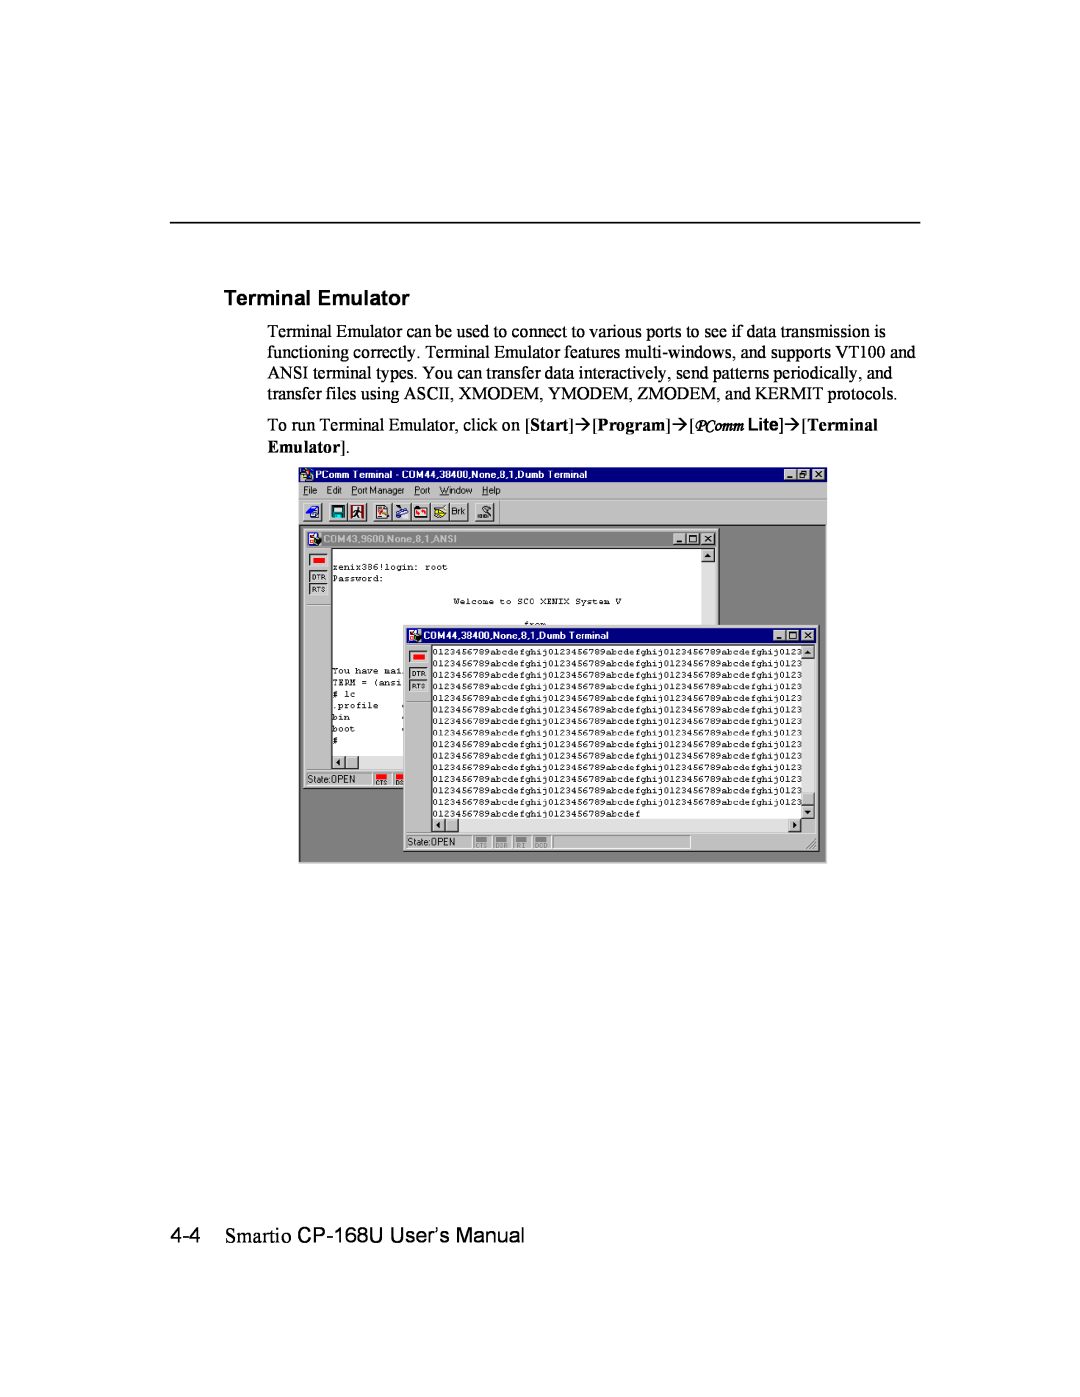 Moxa Technologies user manual Smartio CP-168U User’s Manual, Terminal Emulator 